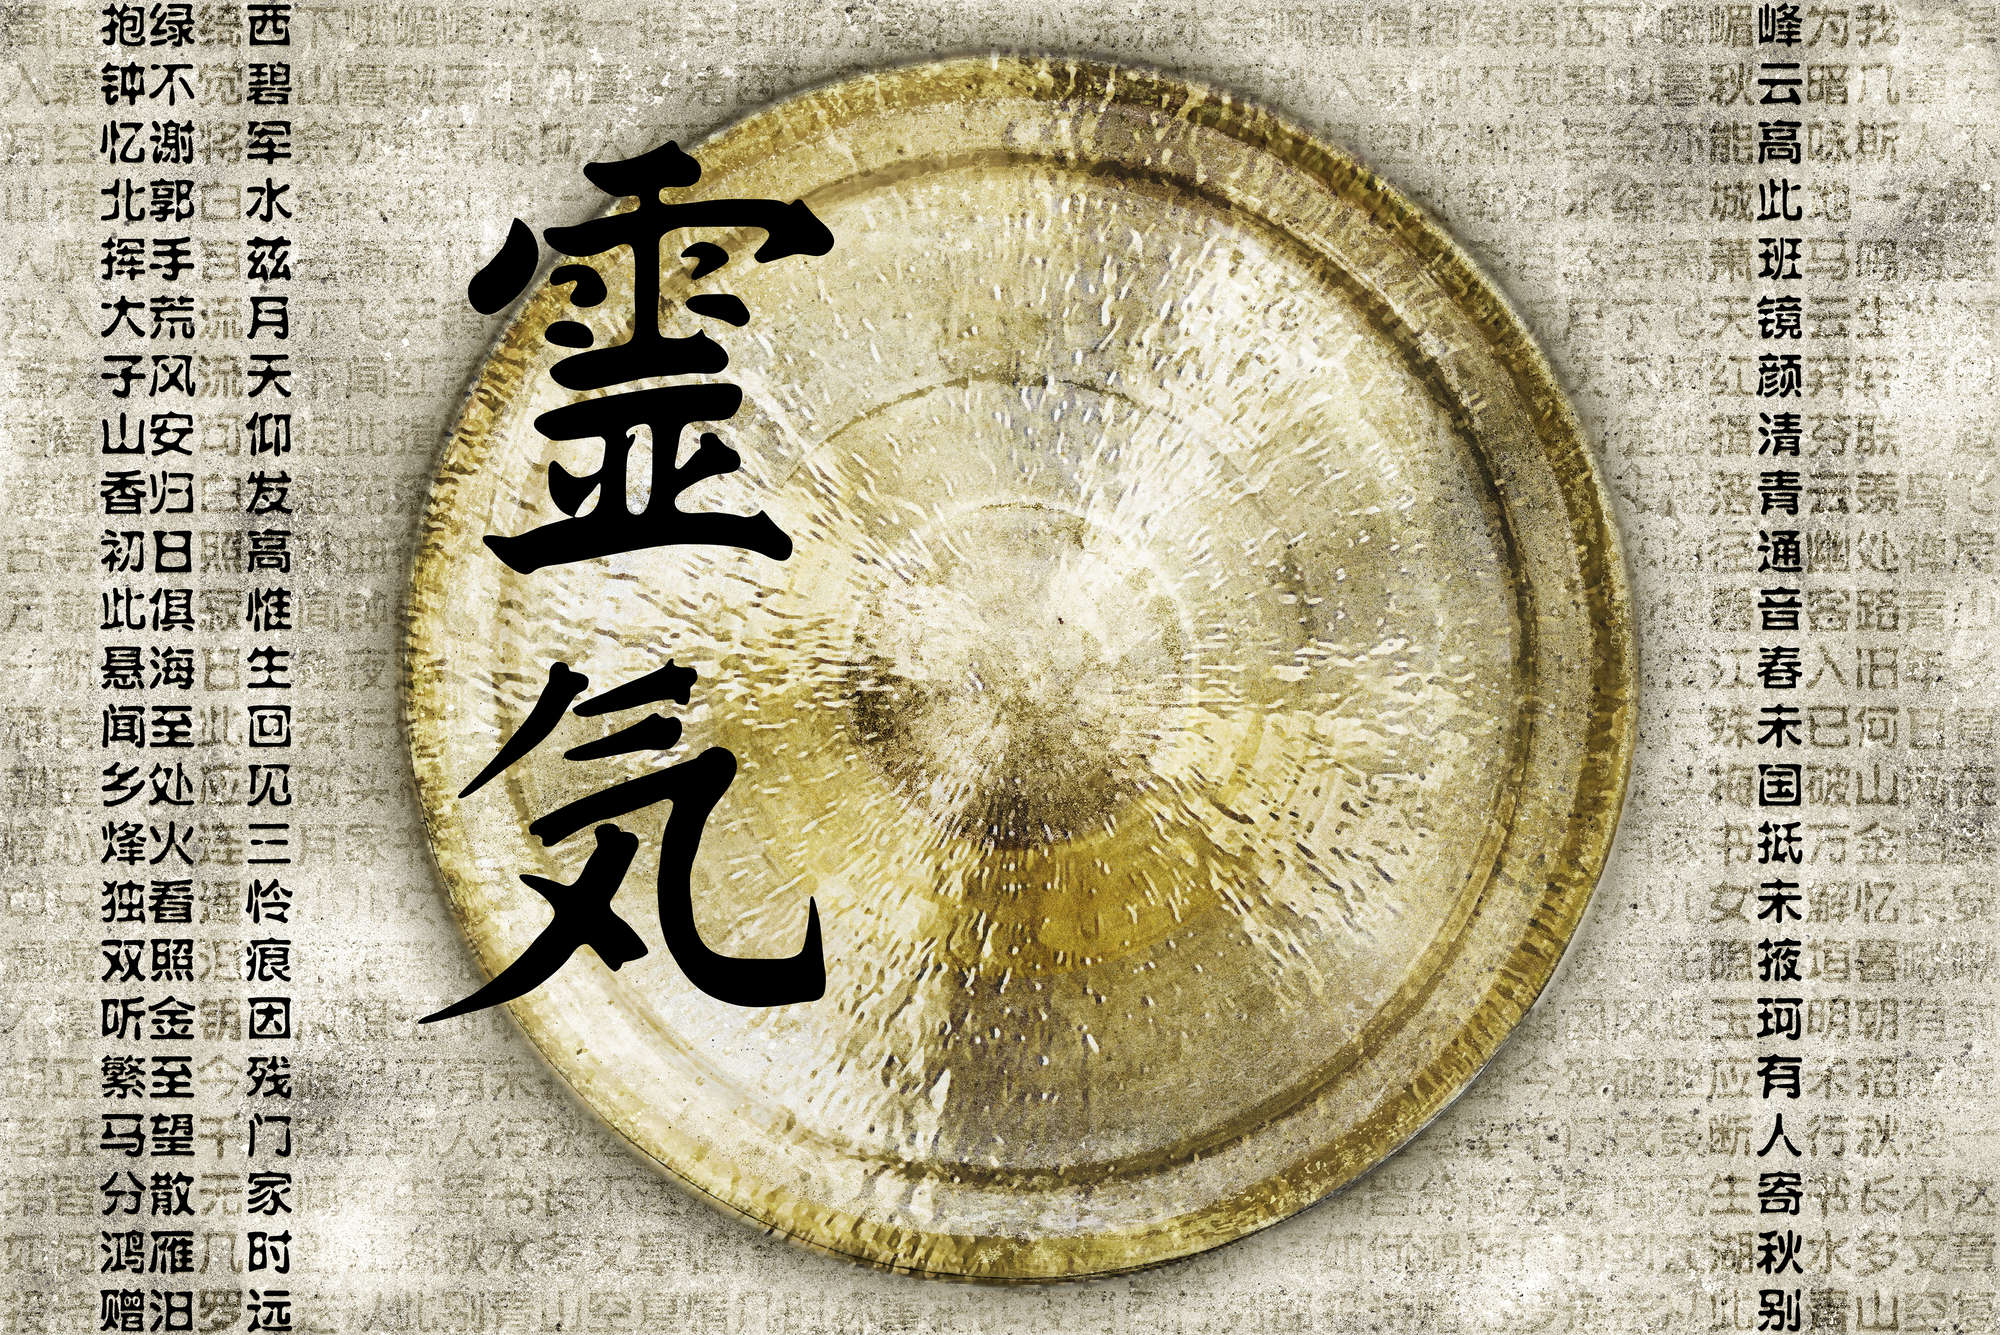             Papel pintado Gong asiático - tejido no tejido liso nacarado
        